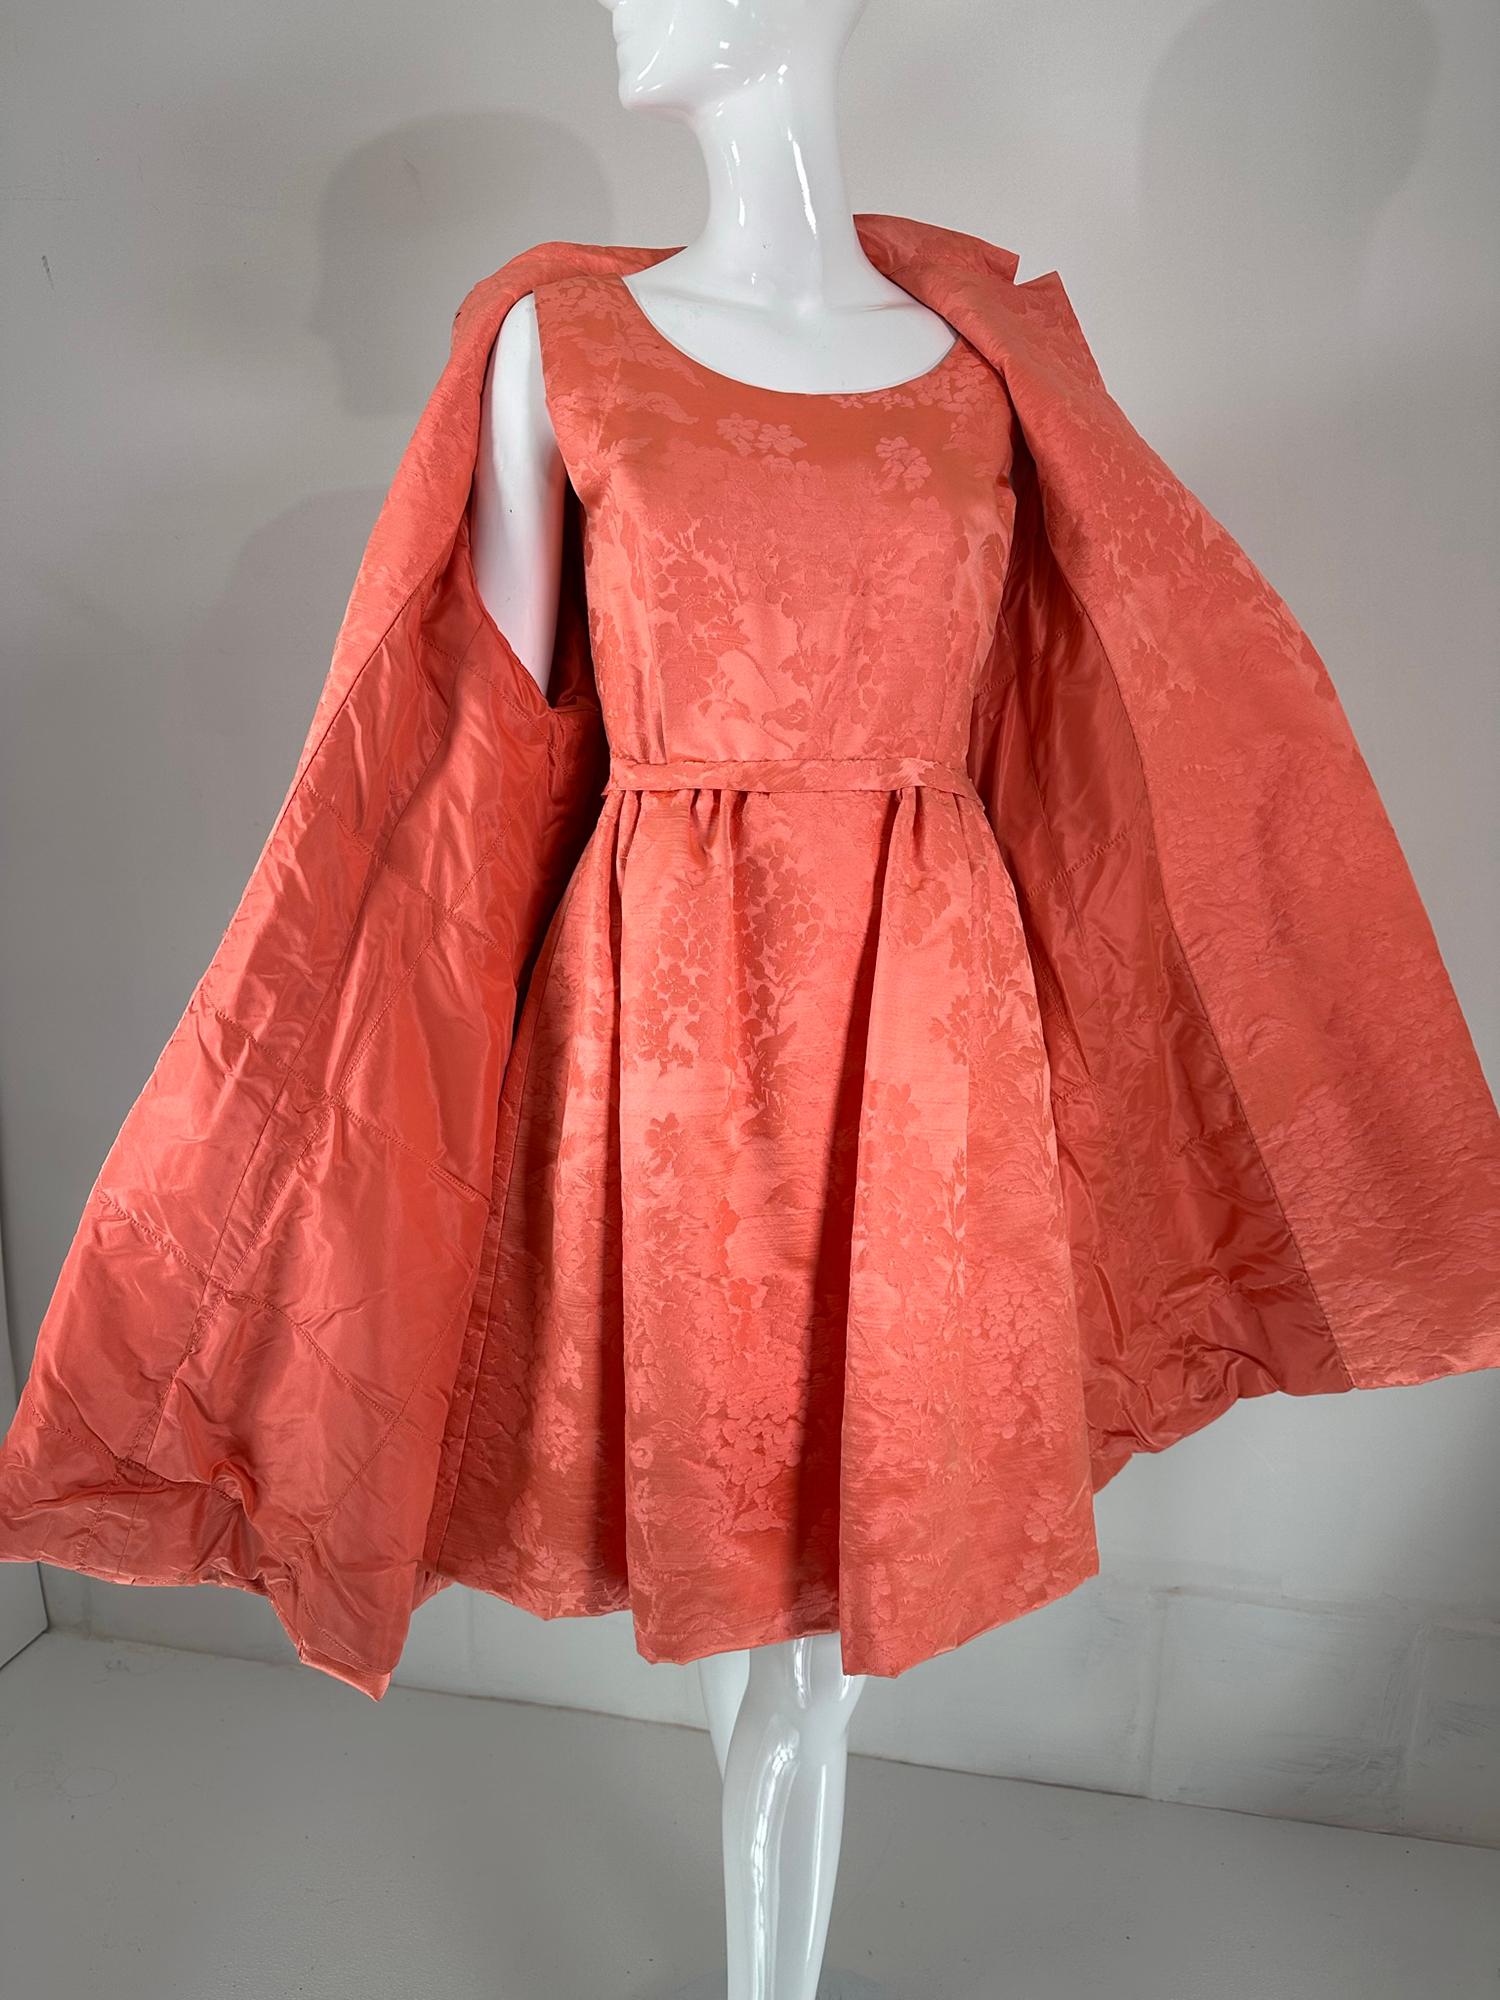 Lanvin Castello Haute Couture Coral Silk Brocade Coat & Dress Ensemble 1950s In Good Condition For Sale In West Palm Beach, FL